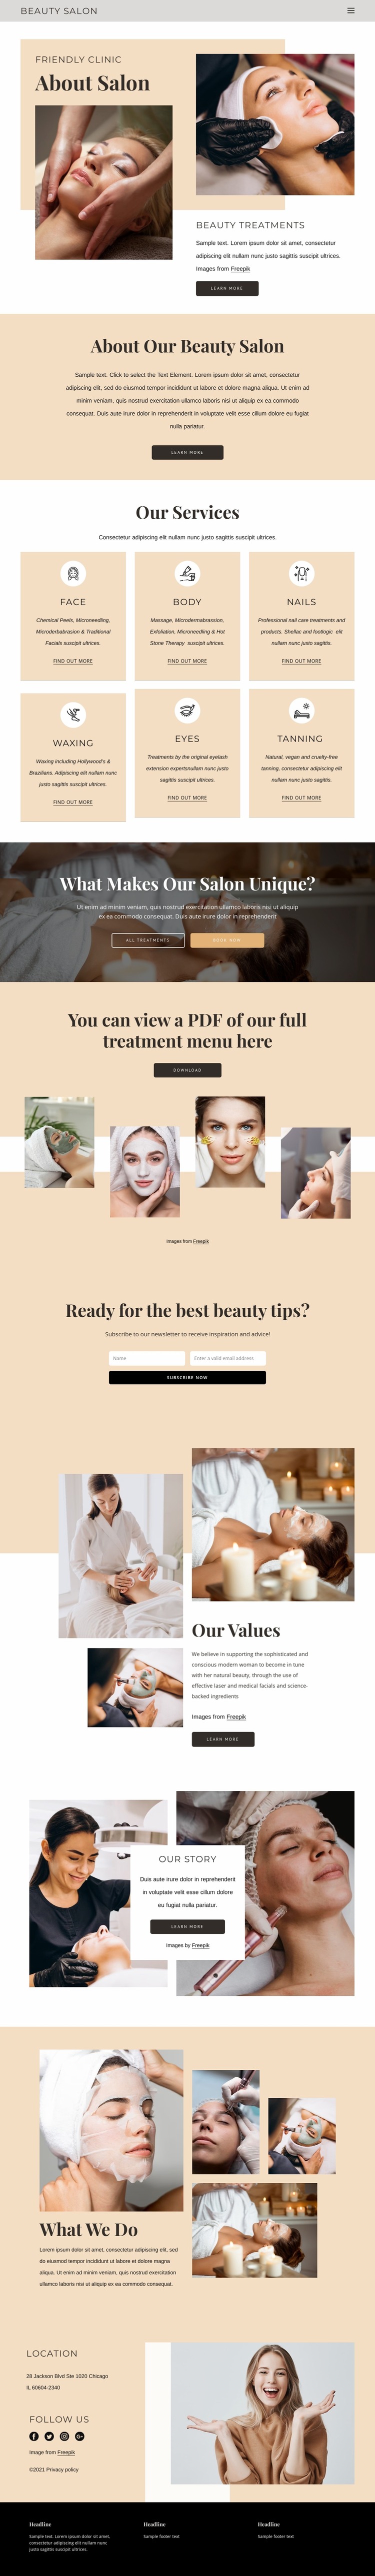 Beauty and aesthetic treatments Website Mockup